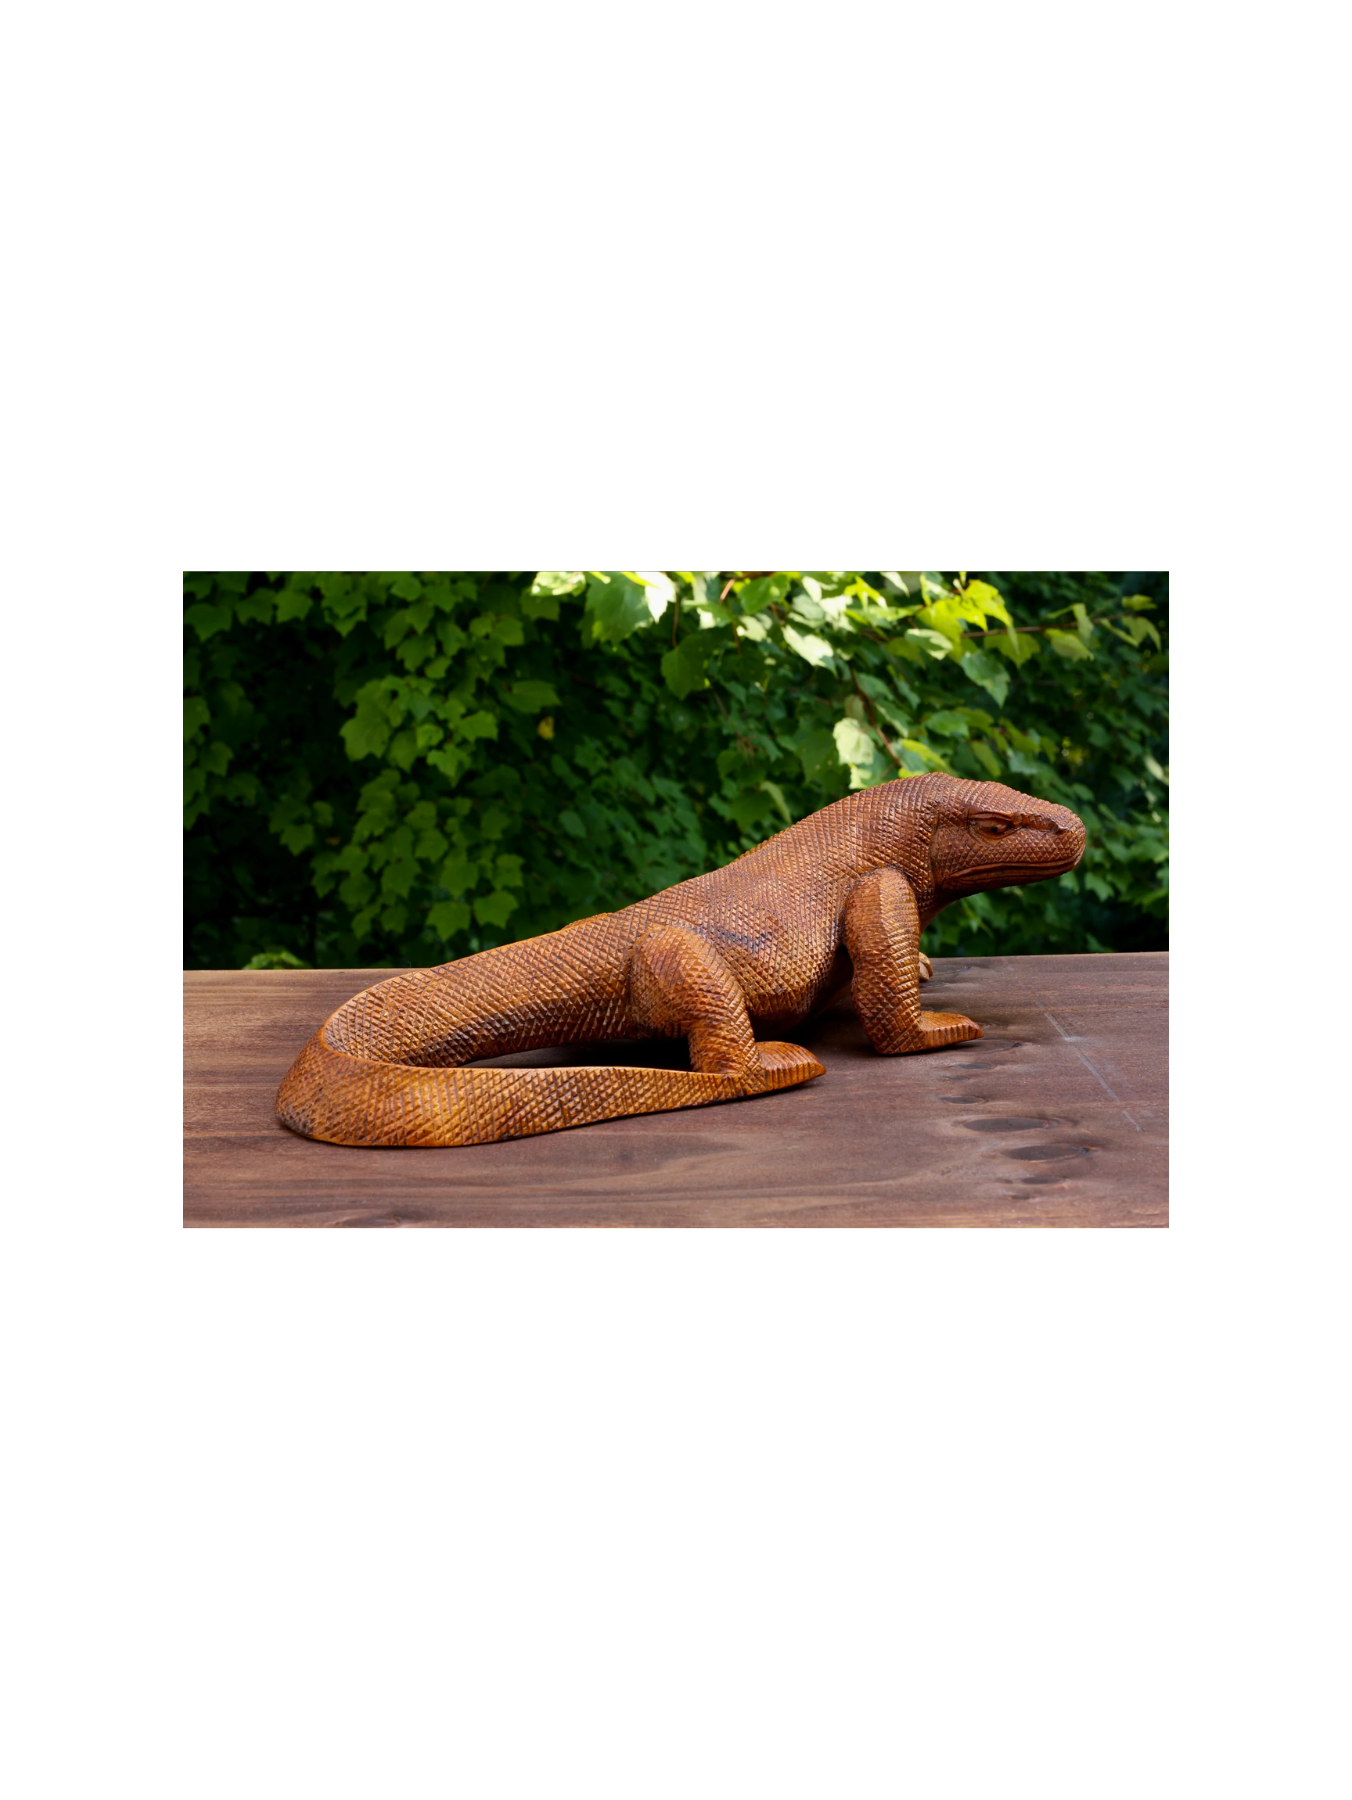 Wooden Hand Carved Komodo Dragon Sculpture Statue Handcrafted Gift Art Decorative Home Decor Figurine Artwork Reptile Decoration Handmade Wood